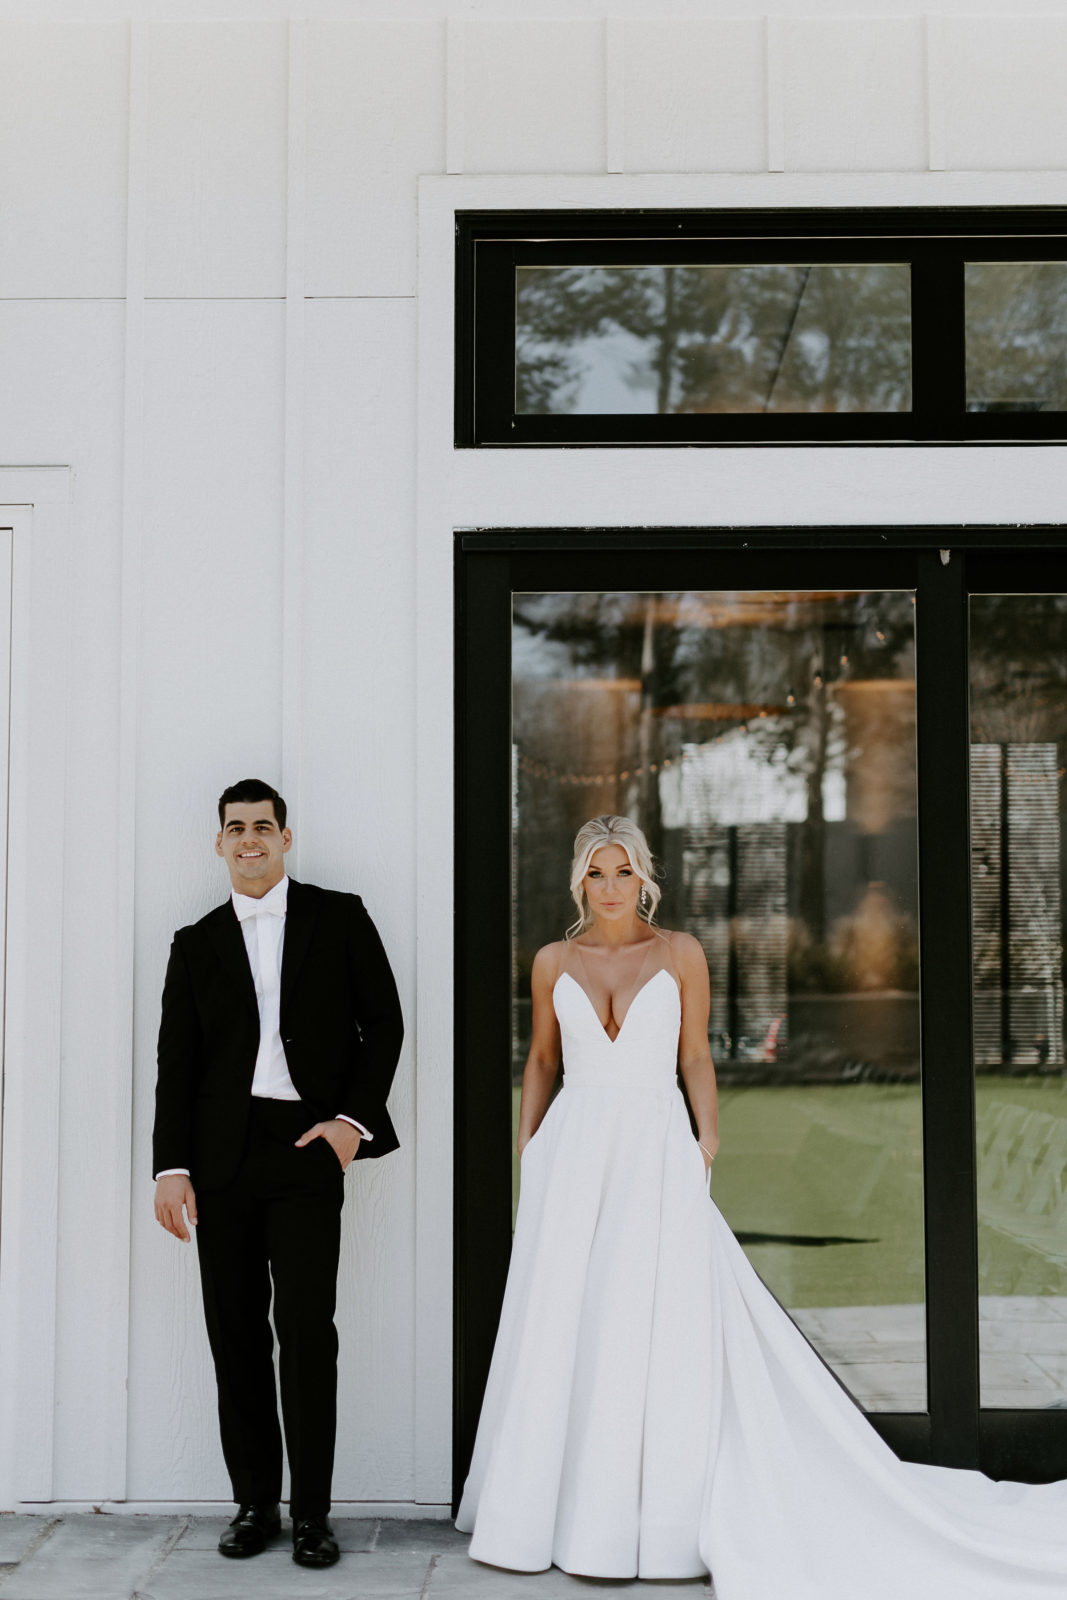 Chic and modern white wedding